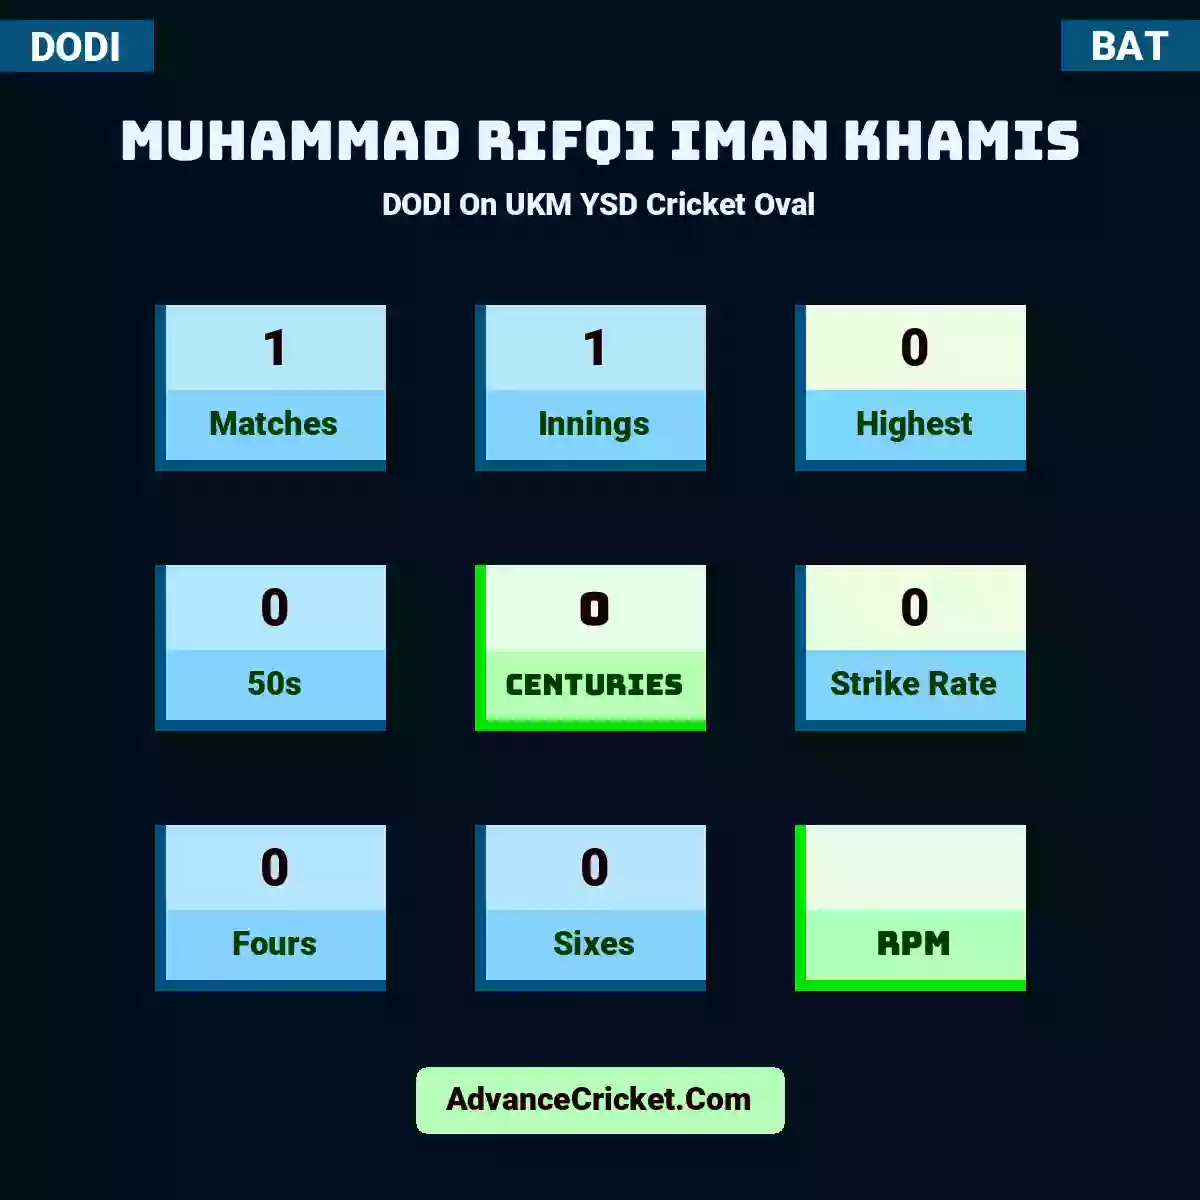 Muhammad Rifqi Iman Khamis DODI  On UKM YSD Cricket Oval, Muhammad Rifqi Iman Khamis played 1 matches, scored 0 runs as highest, 0 half-centuries, and 0 centuries, with a strike rate of 0. m.rifqi.iman.khamis hit 0 fours and 0 sixes.